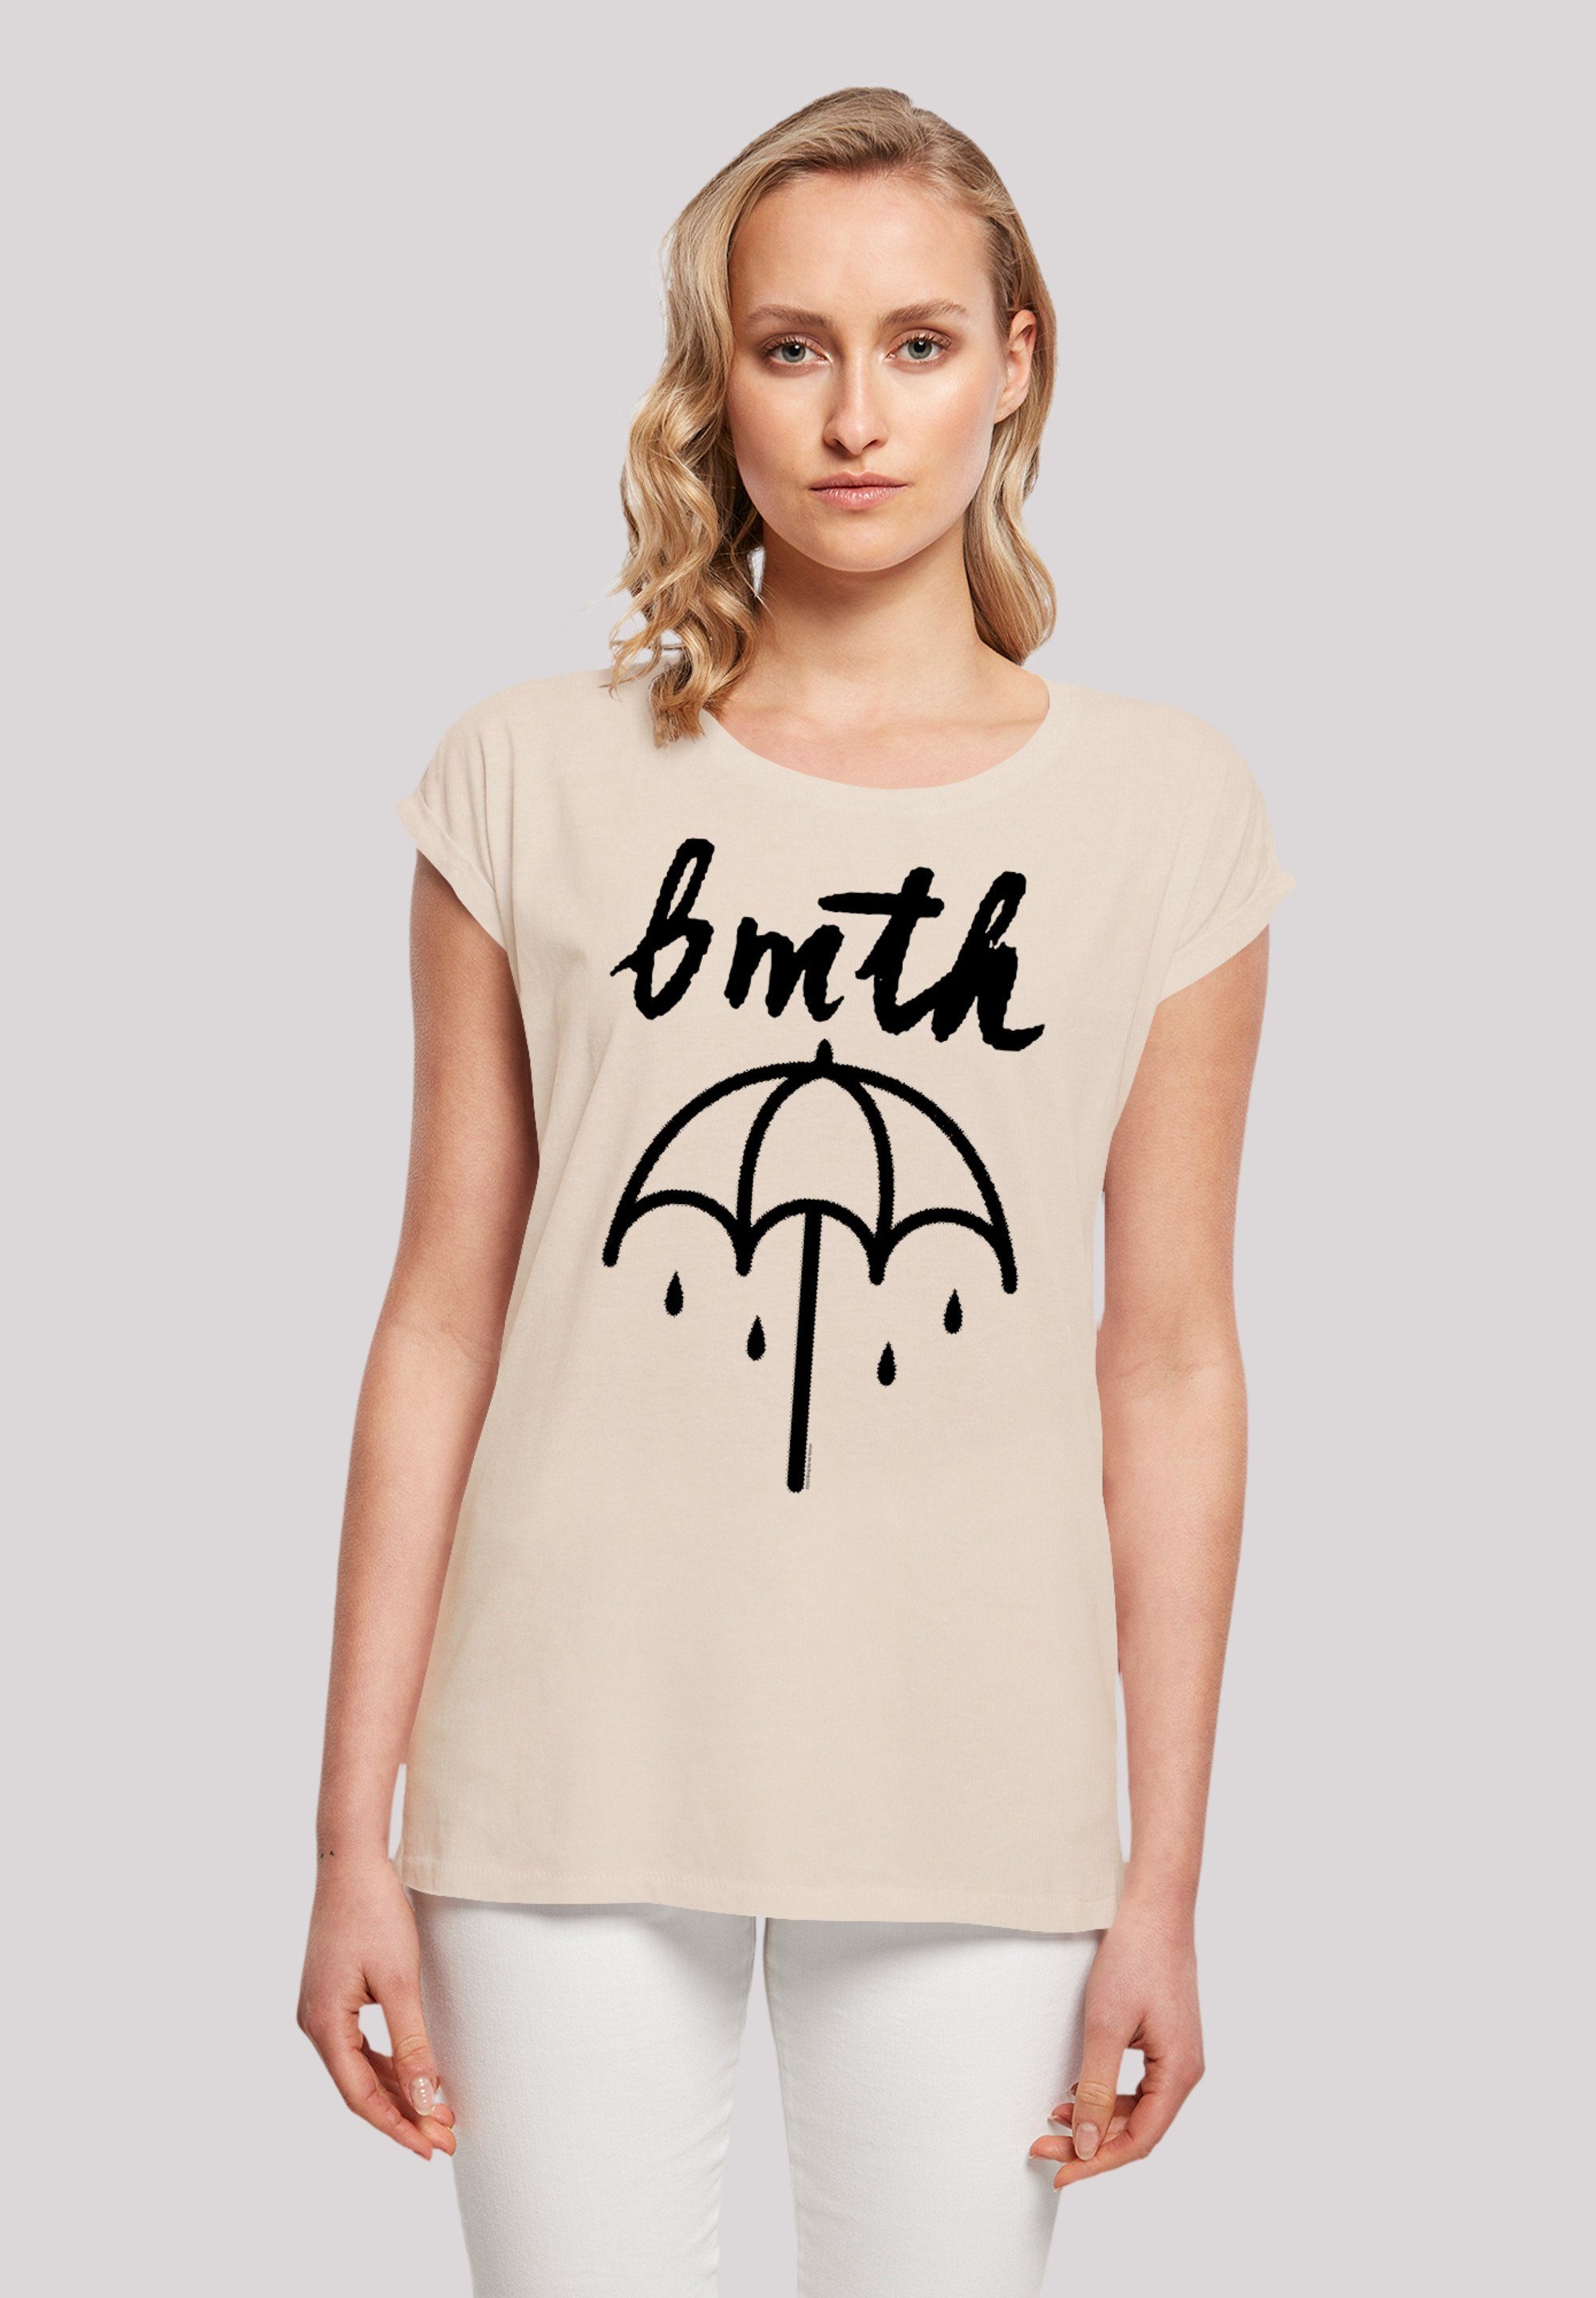 F4NT4STIC T-Shirt BMTH Metal Band Umbrella Premium Qualität, Rock-Musik, Band Whitesand